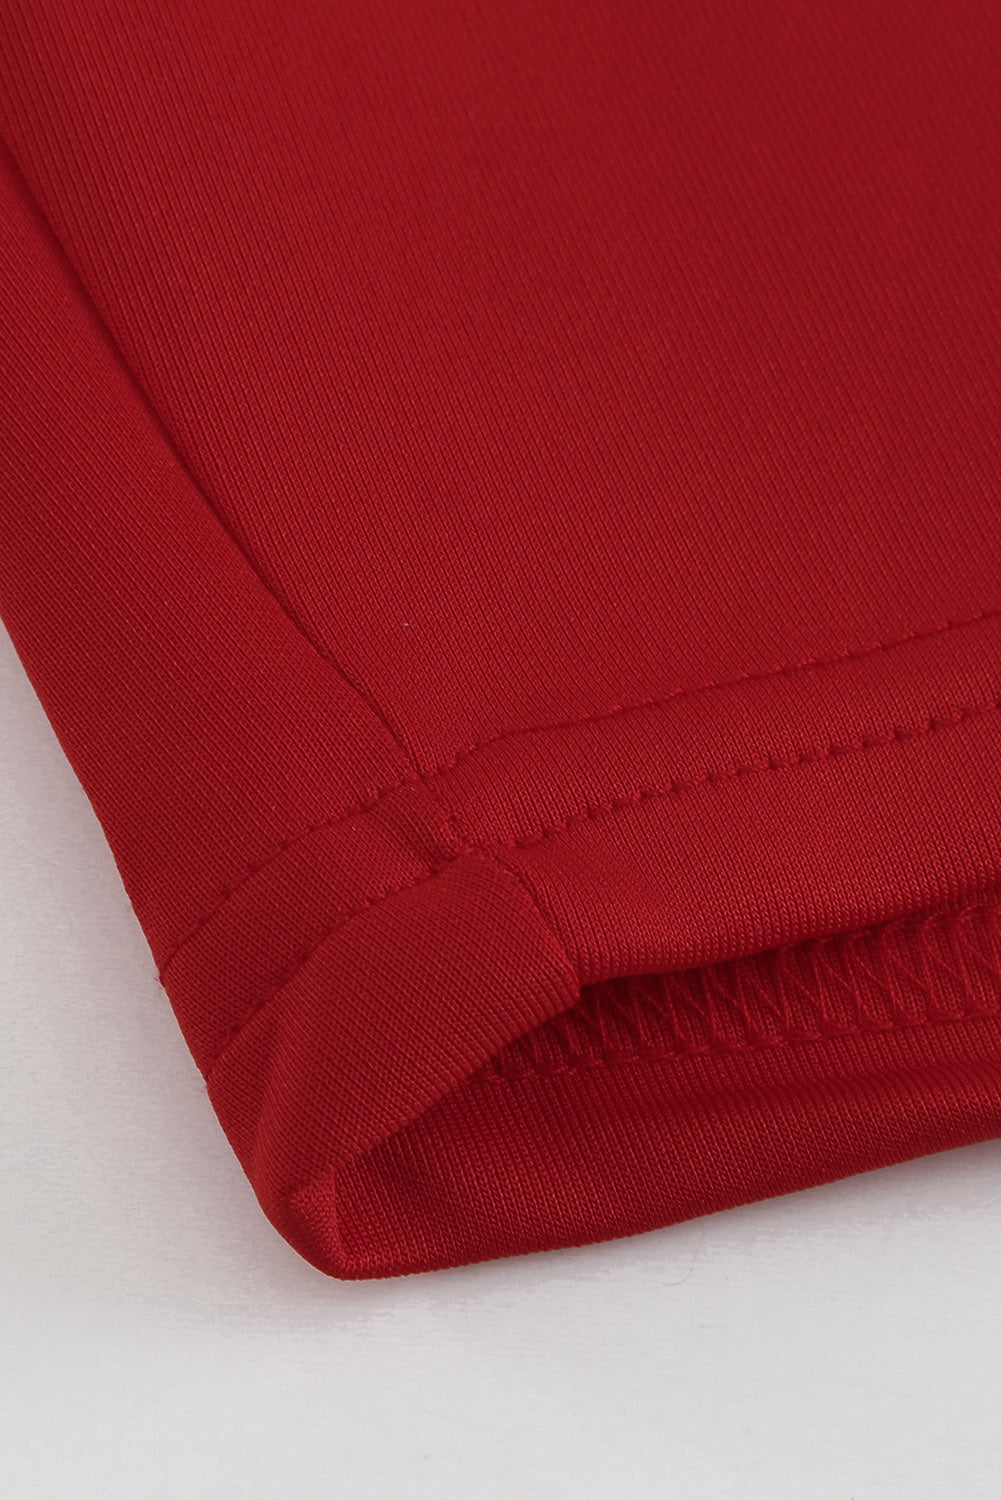 Fiery Red Long Sleeve Front Knot Plus size Midi Dress Plus Size Dresses JT's Designer Fashion